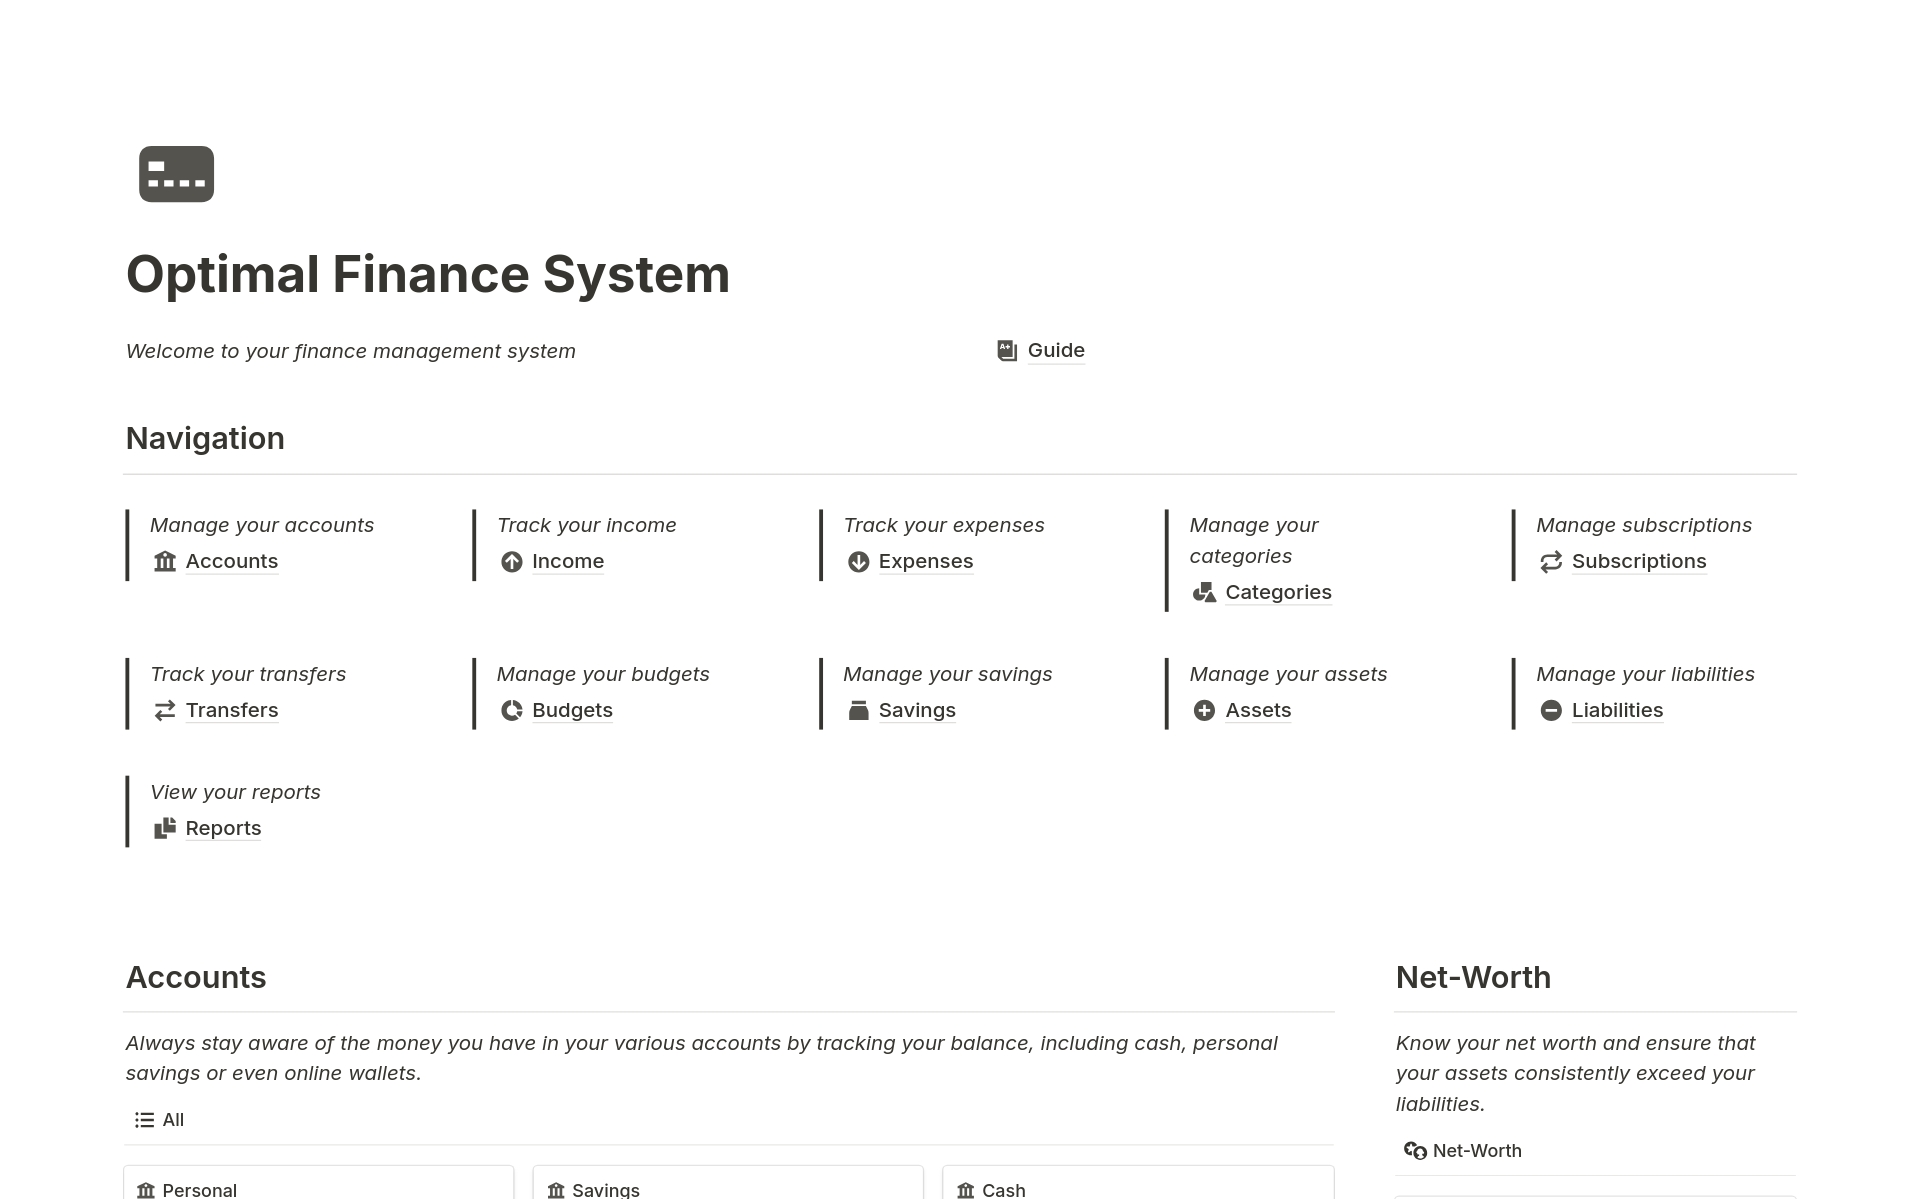 Aperçu du modèle de Finance System